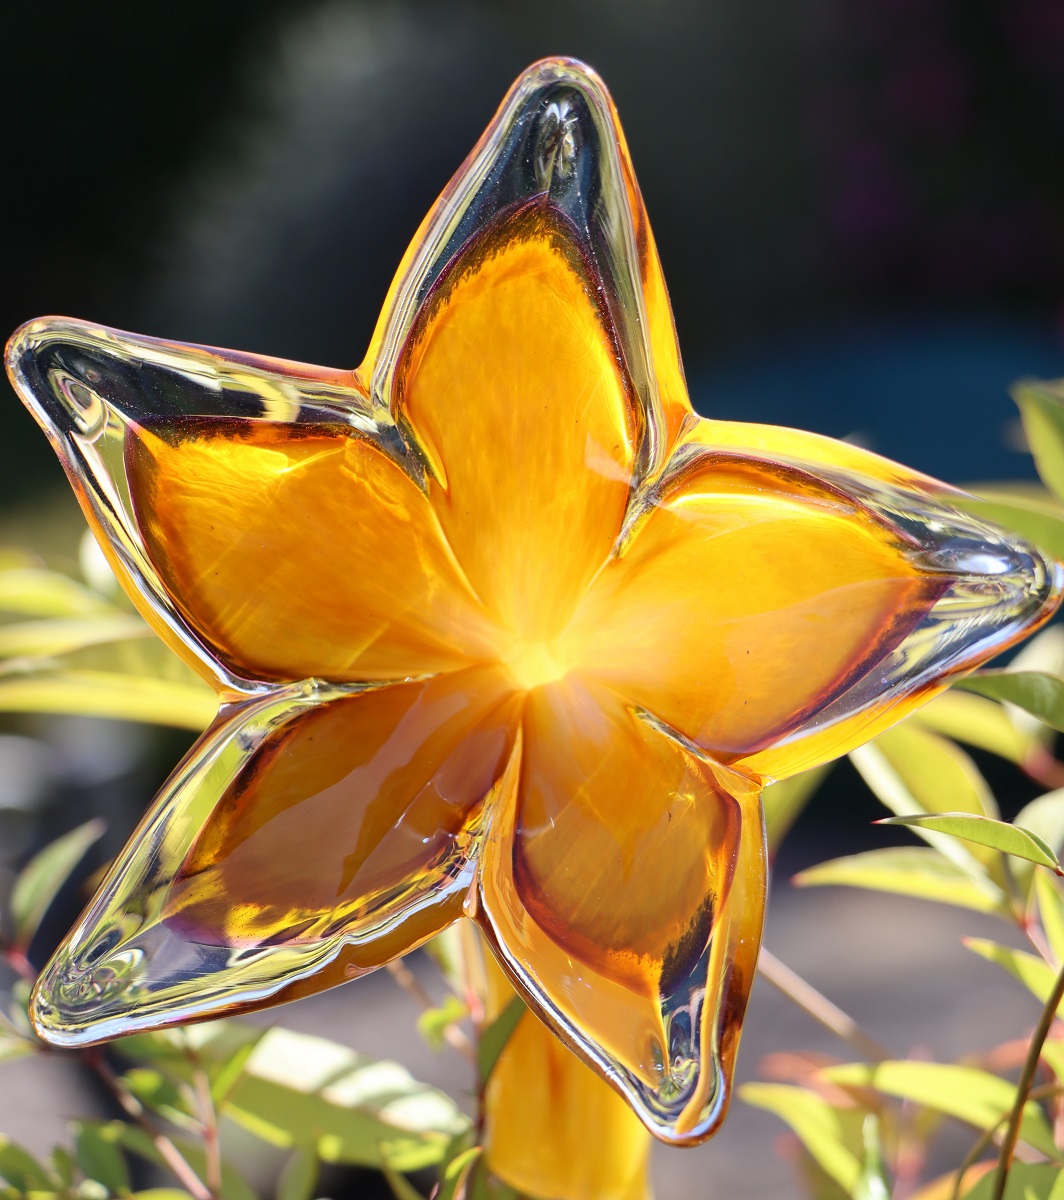 'Glass Flower' by John Owen of Worcester U3A